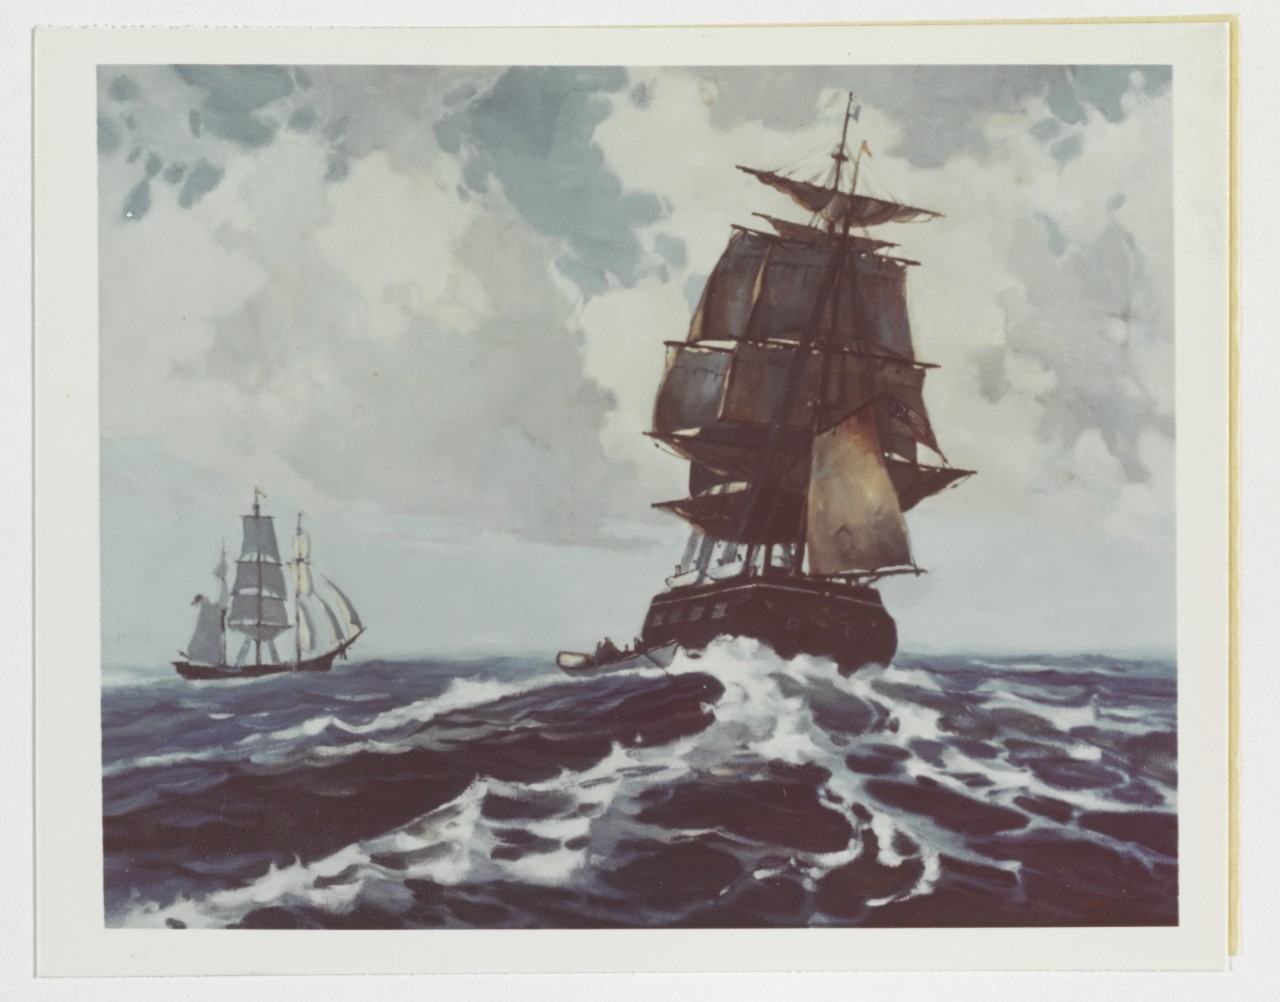 "The ship 'JAMES ARNOLD' and a bark at sea"